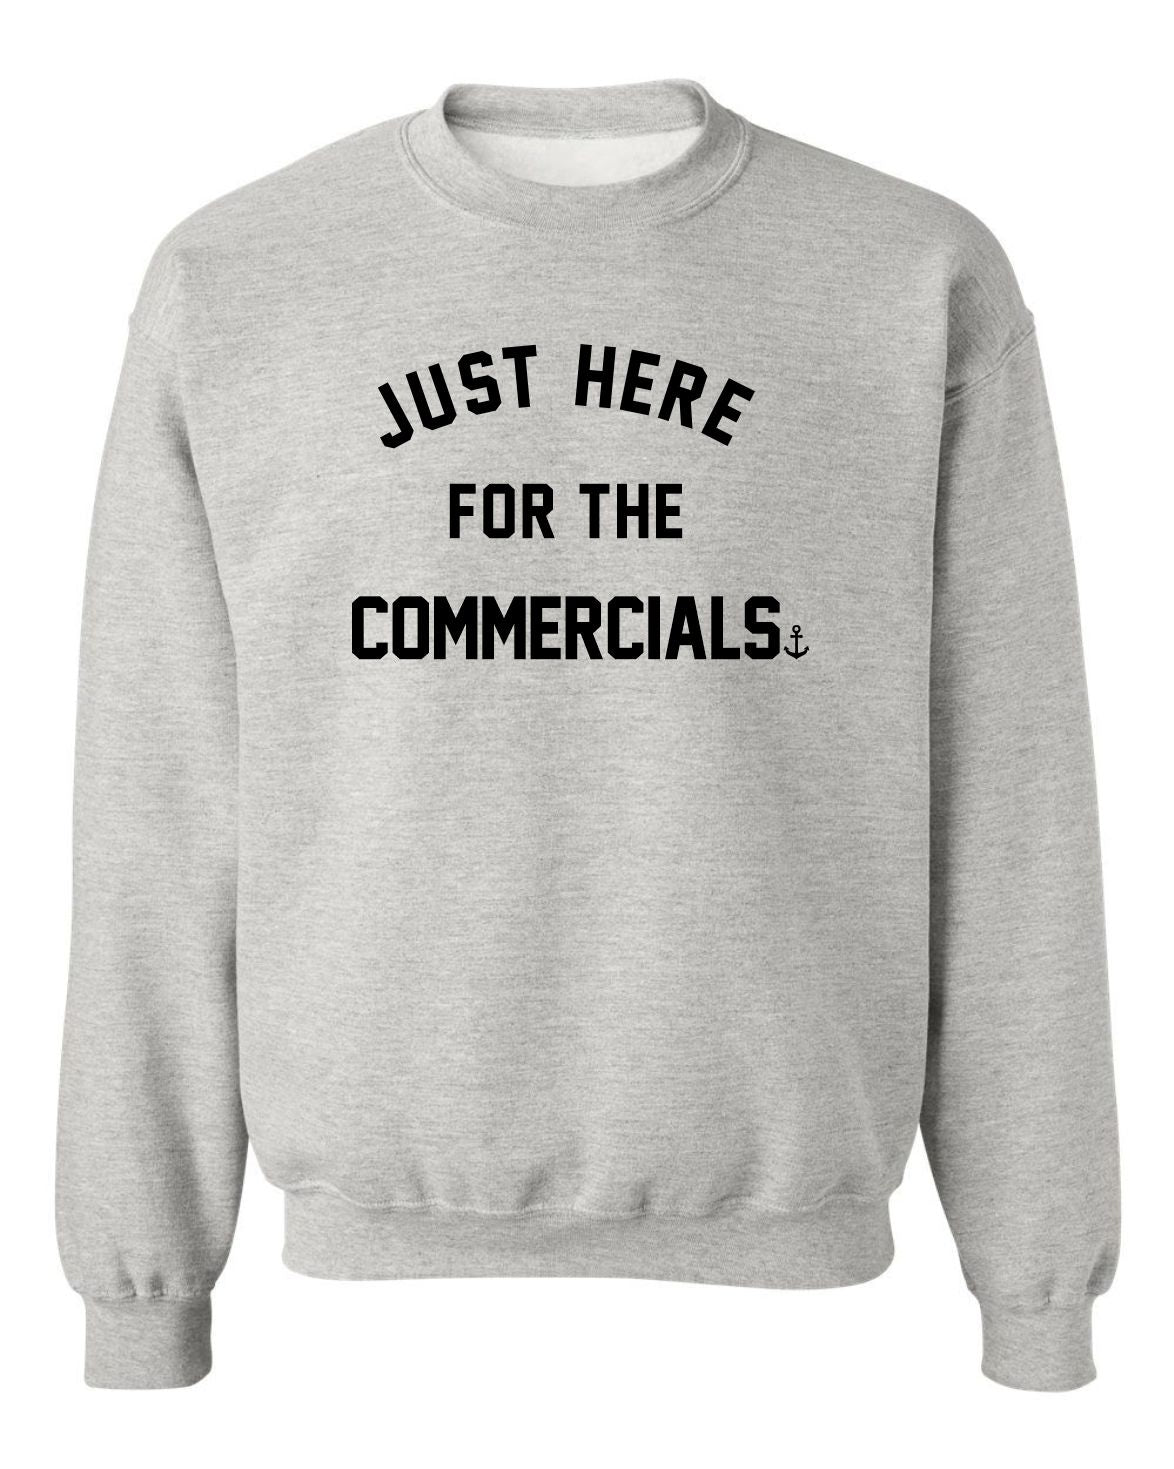 "Just Here For The Commercials" Unisex Crewneck Sweatshirt